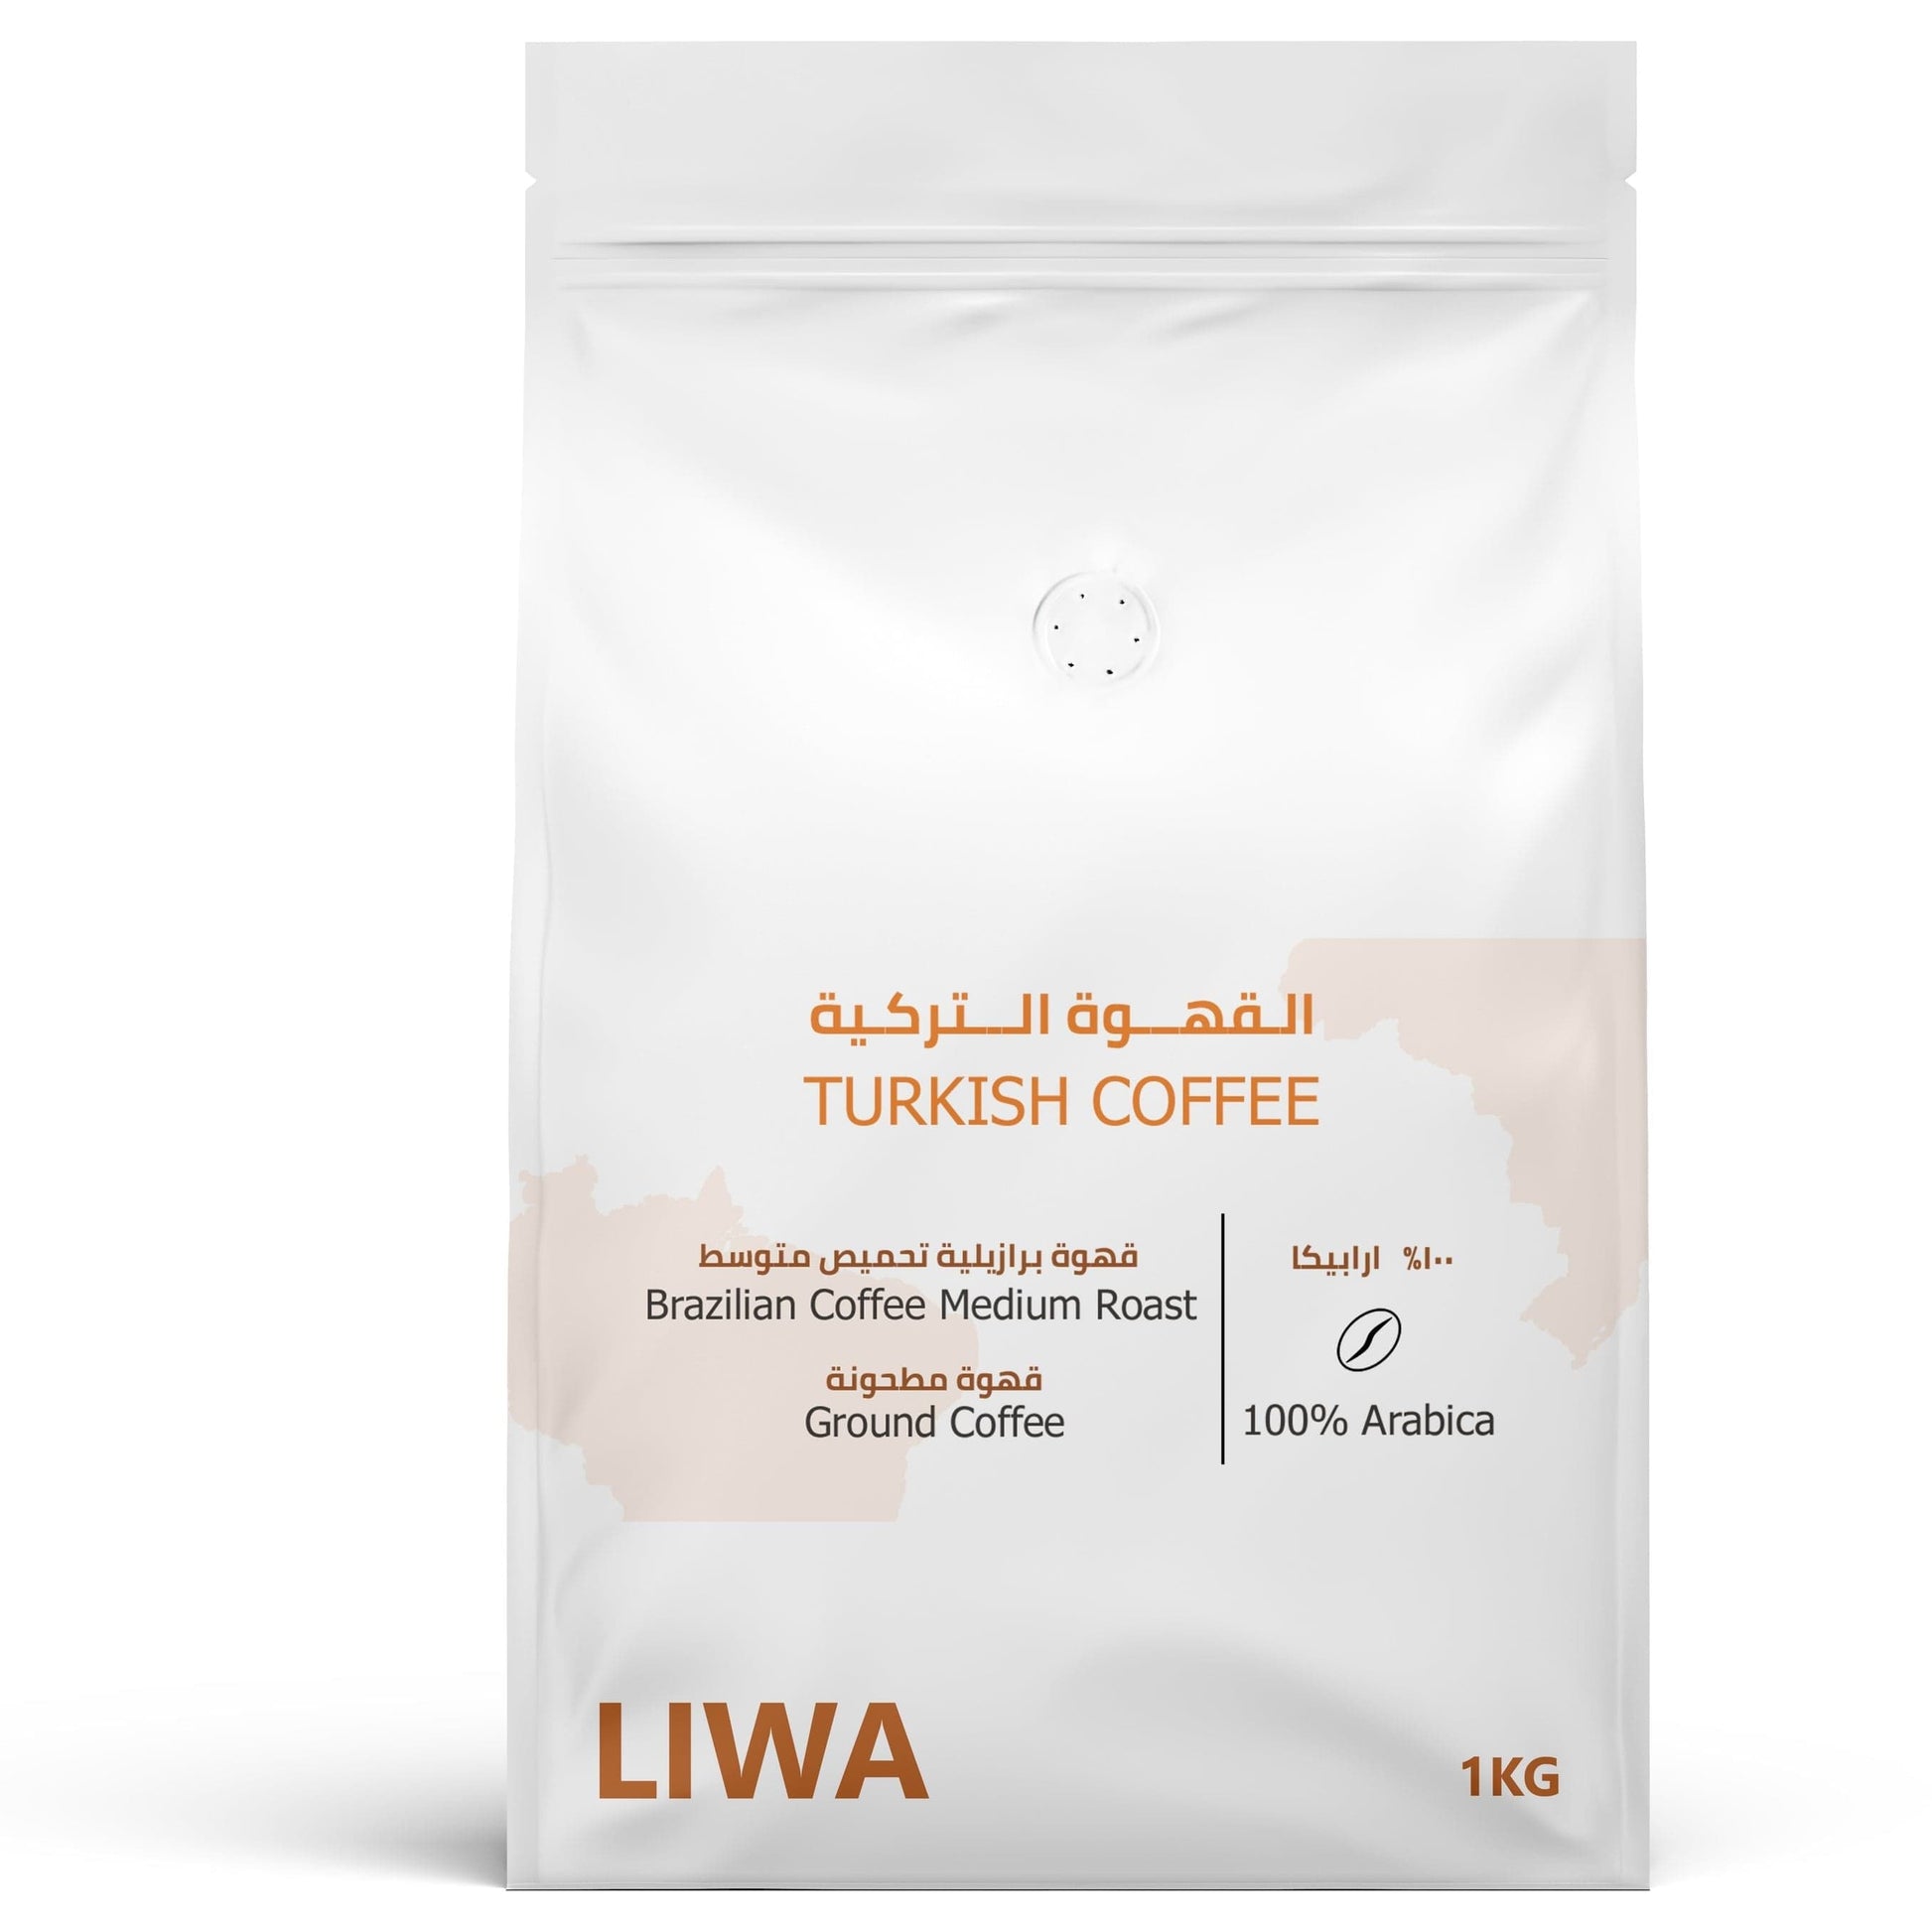 Turkish Coffee - Premium Turkish Coffee from Liwa Coffee Roastery - Just Dhs. 19! Shop now at Liwa Coffee Roastery